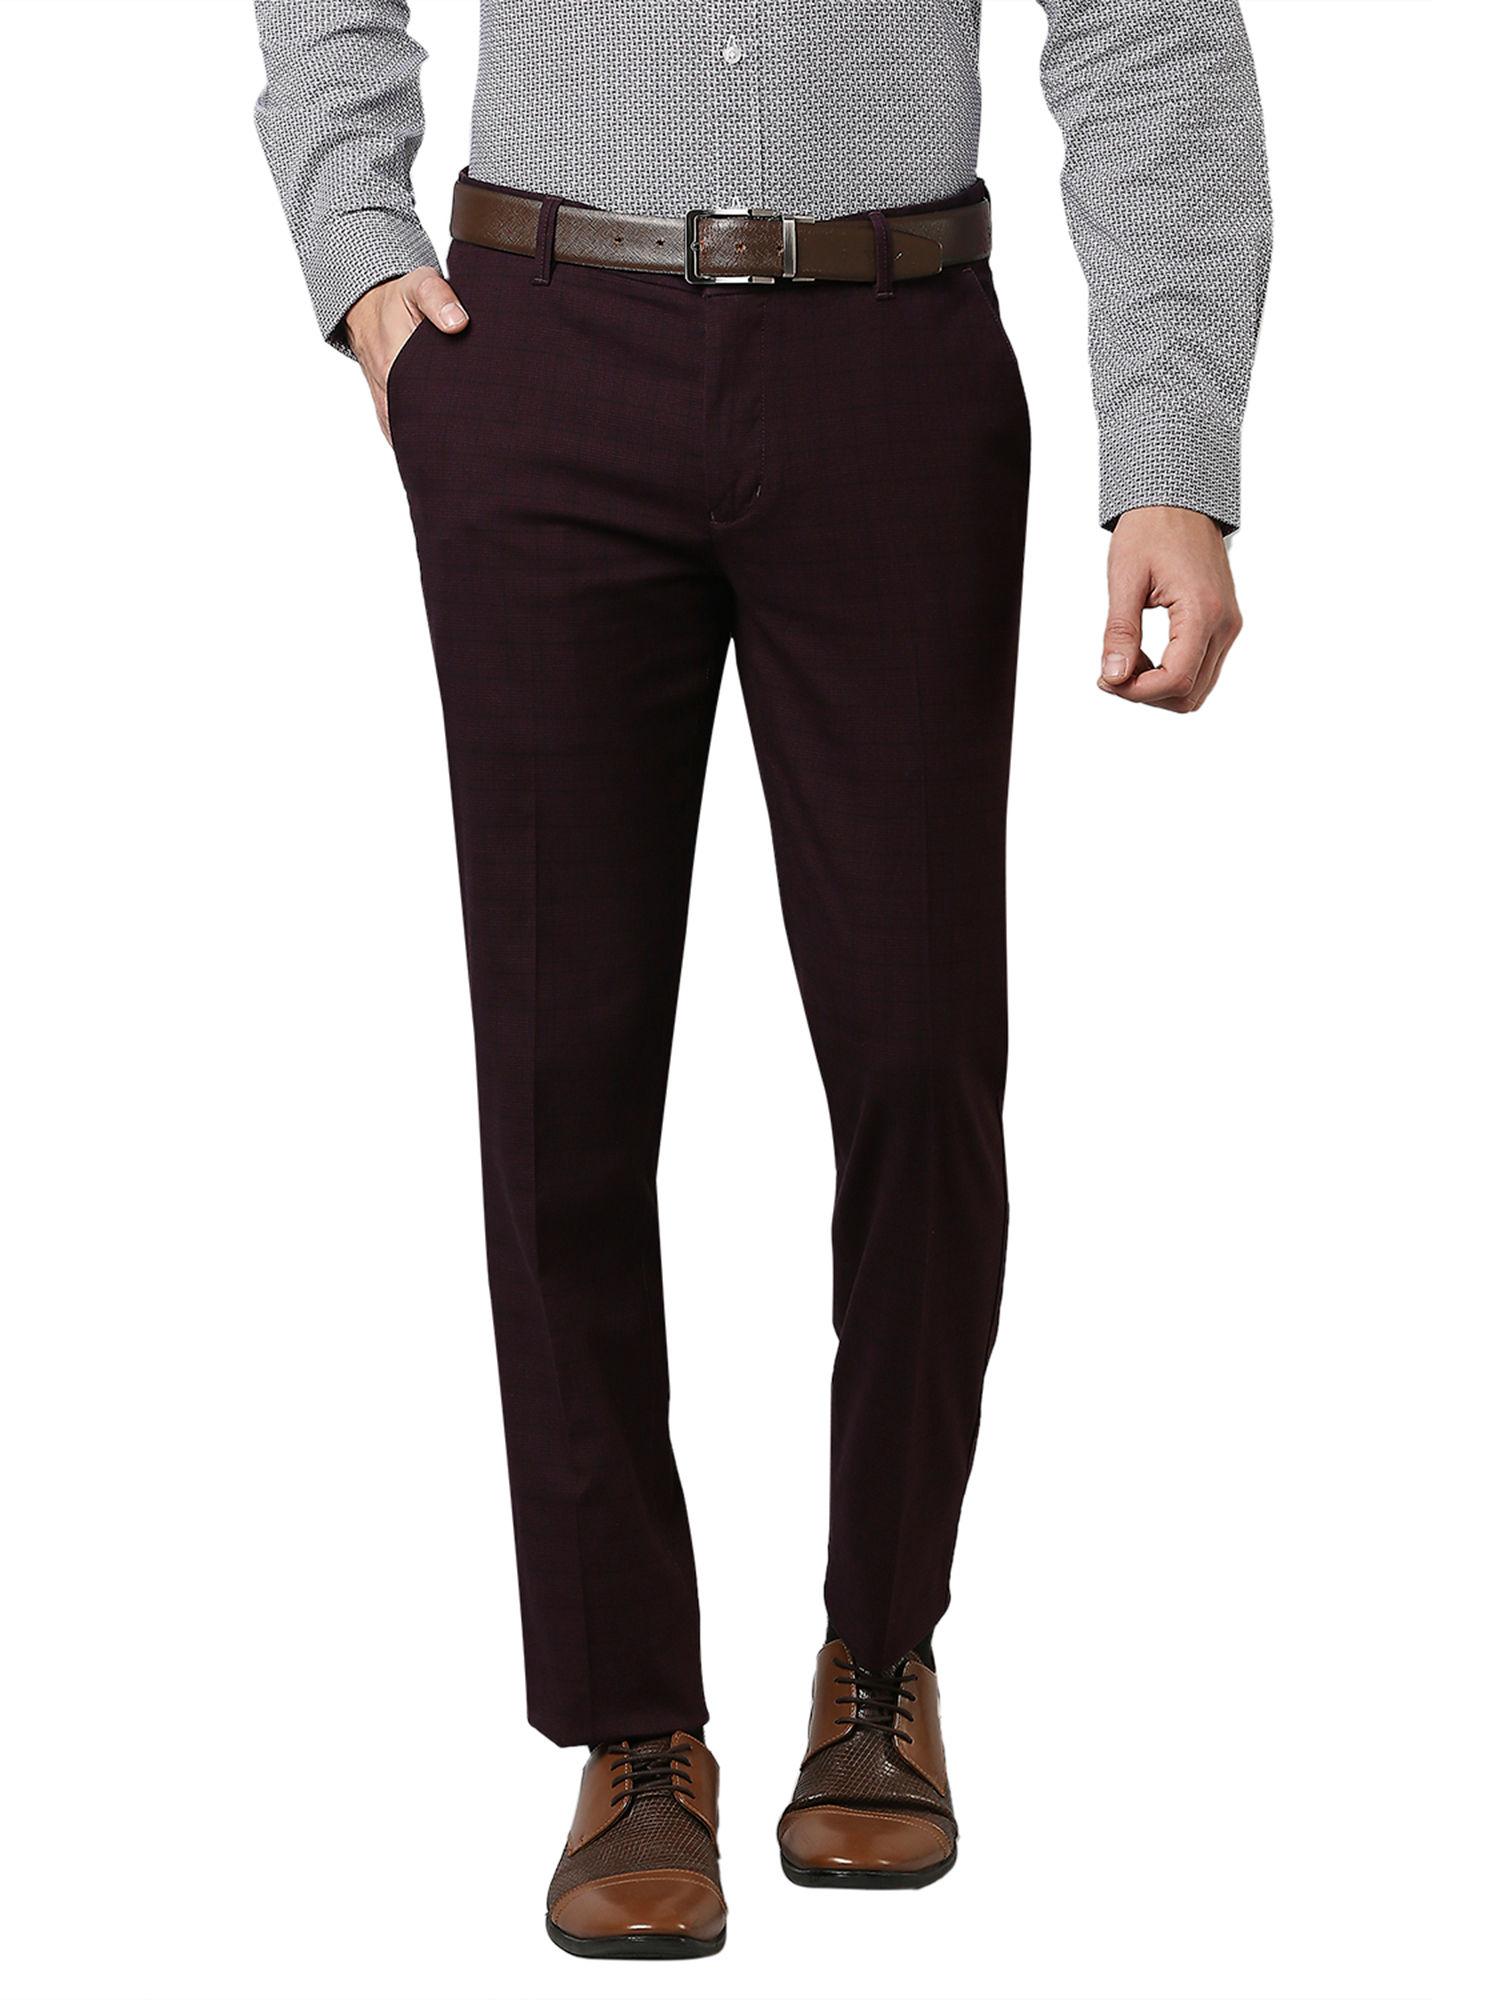 dark maroon trouser